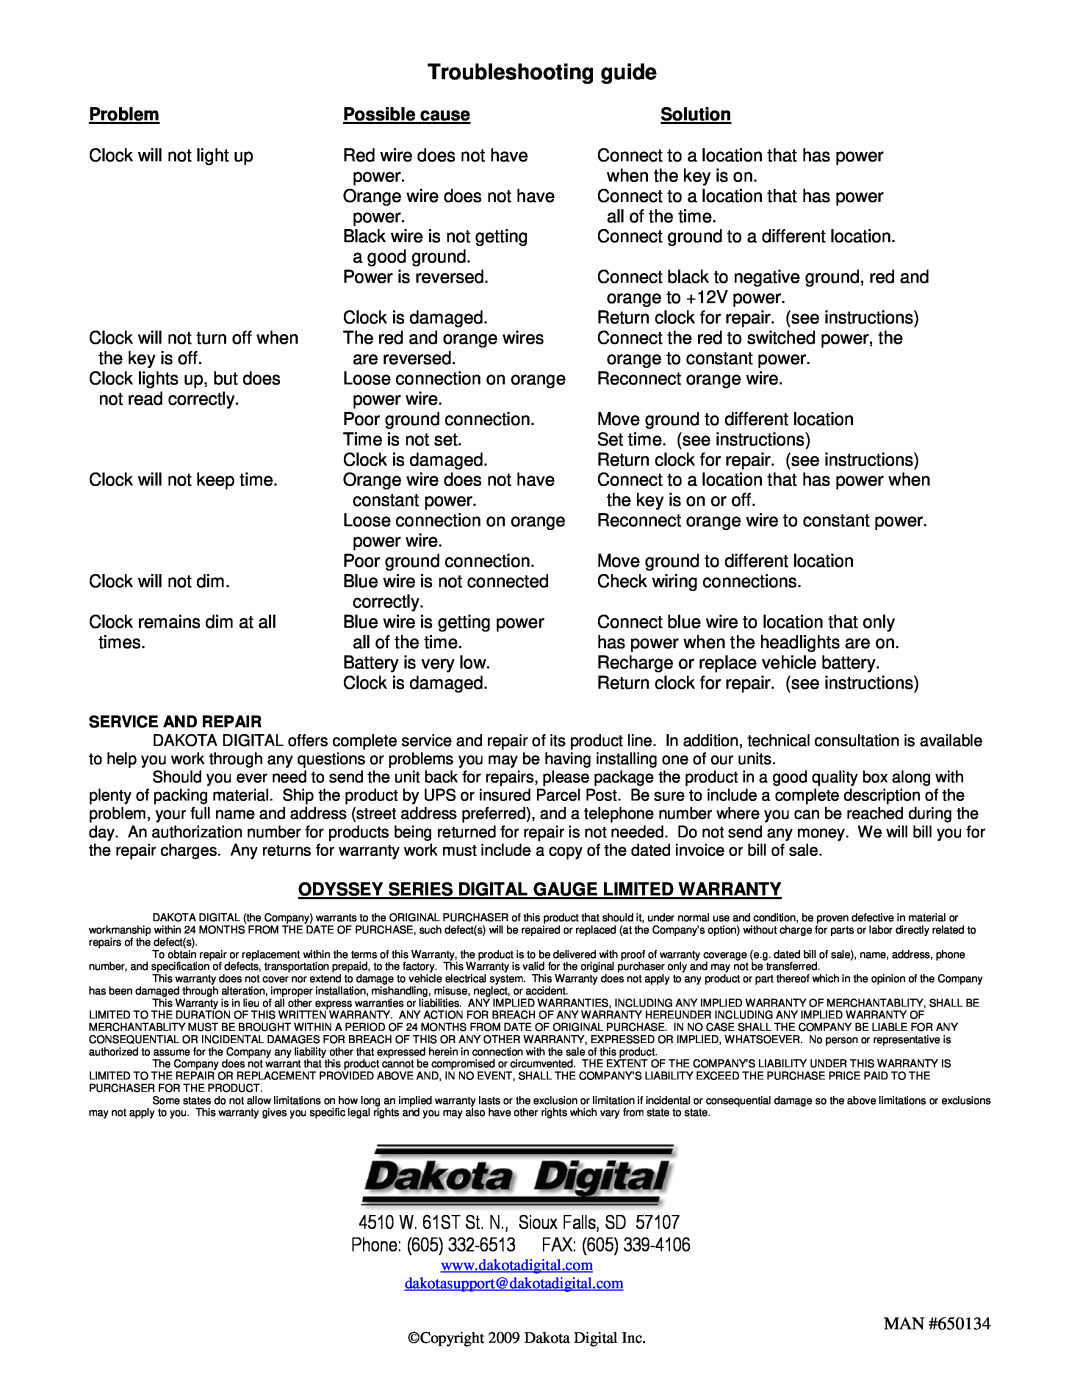 Dakota Digital MAN #650134 Problem, Possible cause, Solution, Odyssey Series Digital Gauge Limited Warranty 